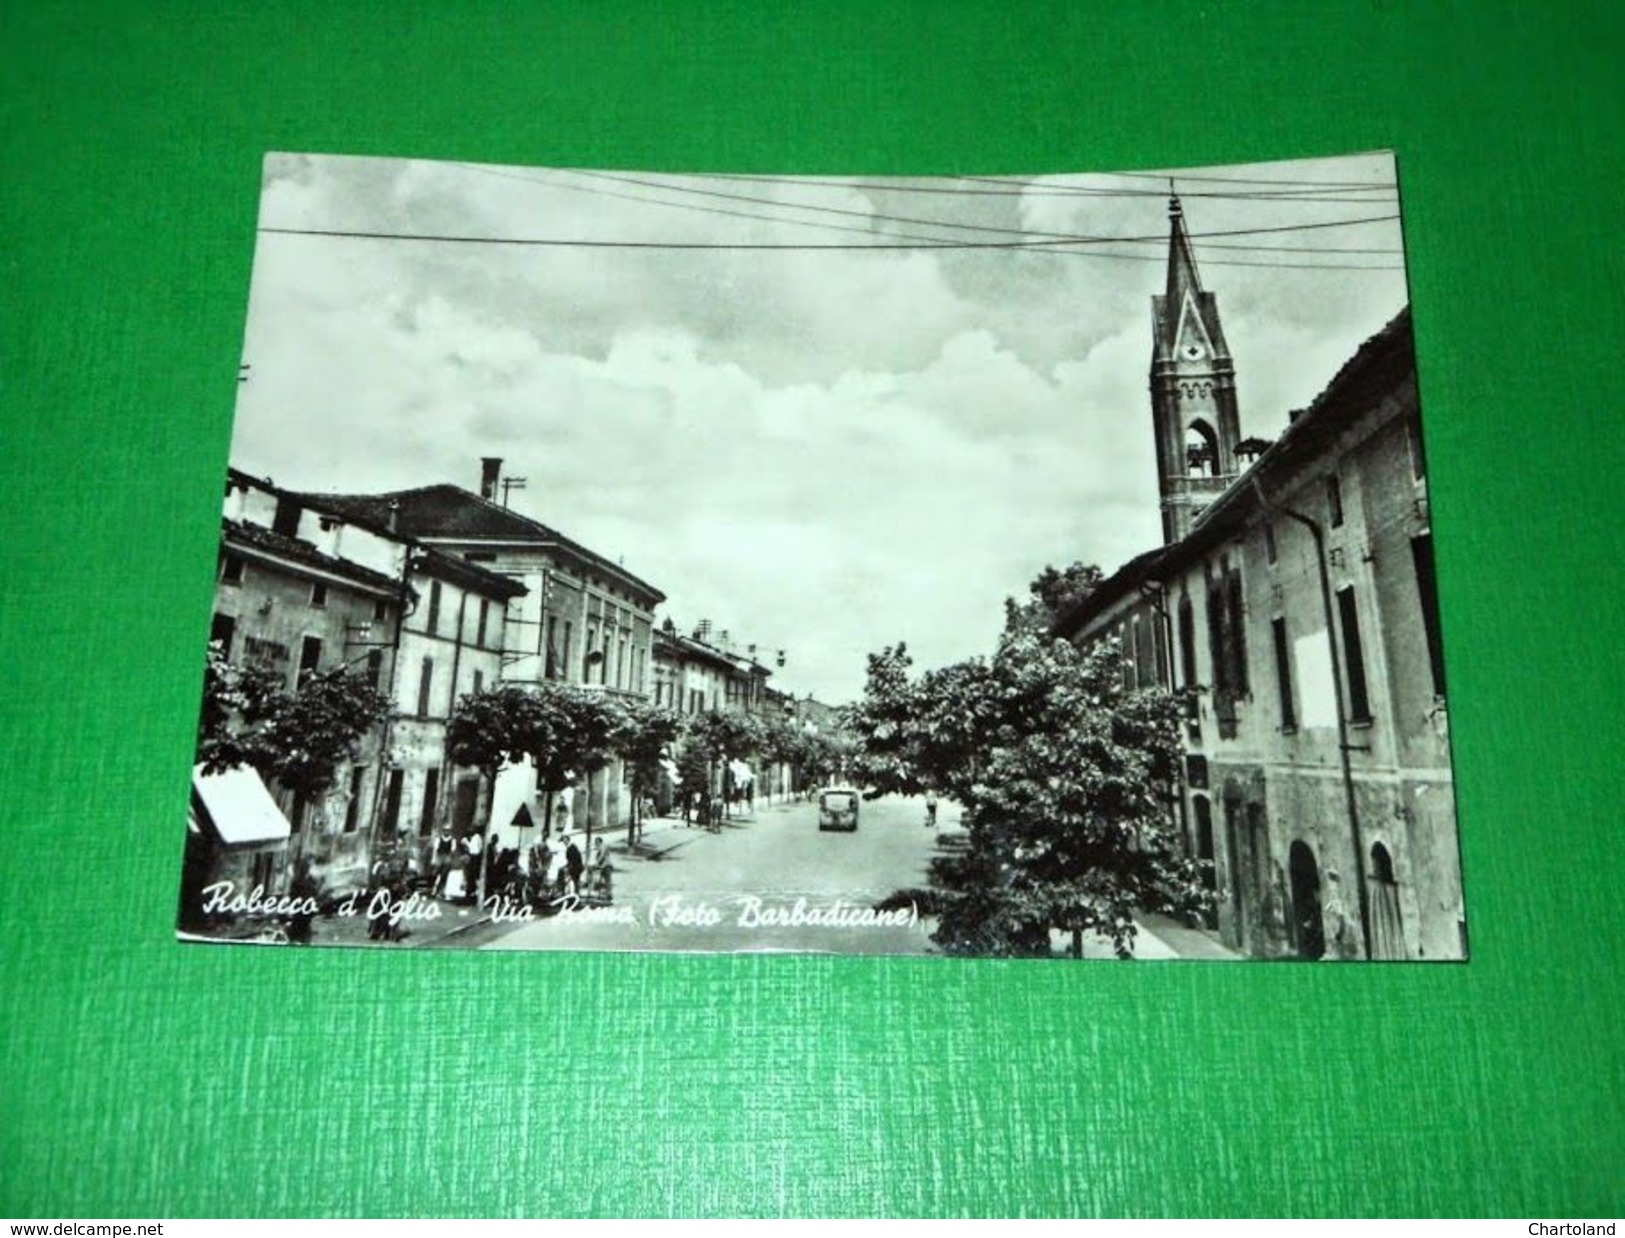 Cartolina Robecco D'Oglio - Via Roma ( Foto Barbadicane ) 1956 - Cremona